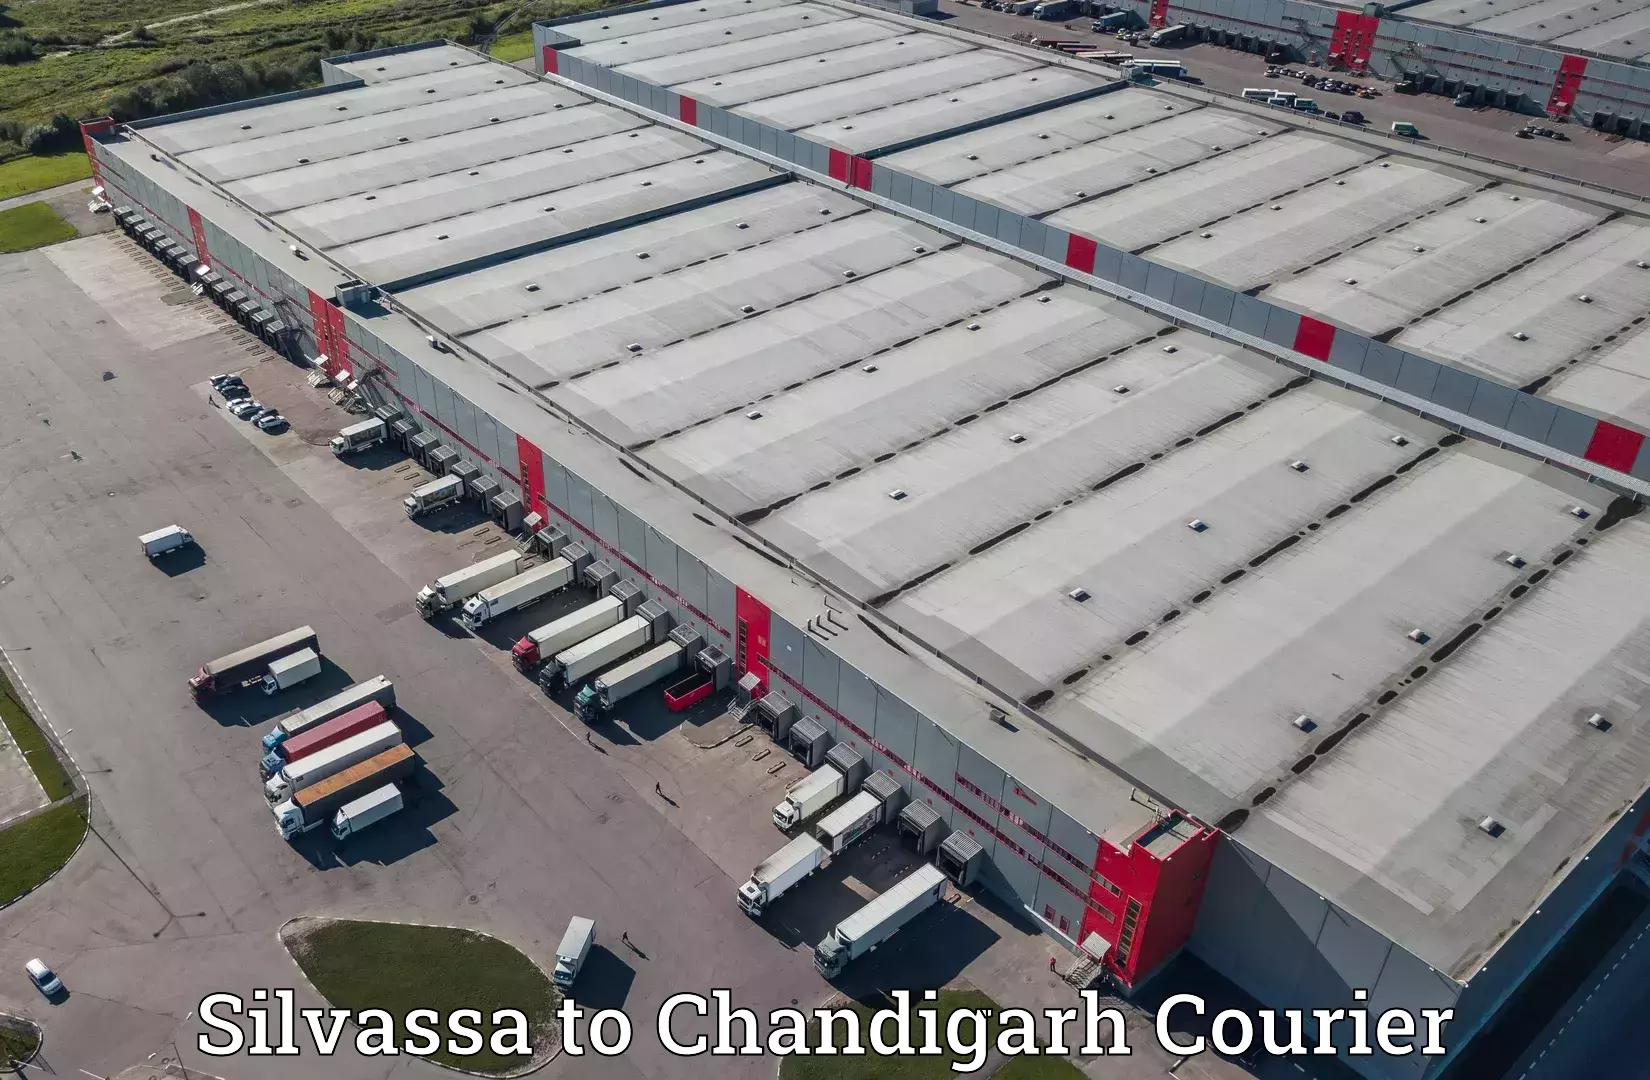 Courier service partnerships Silvassa to Chandigarh